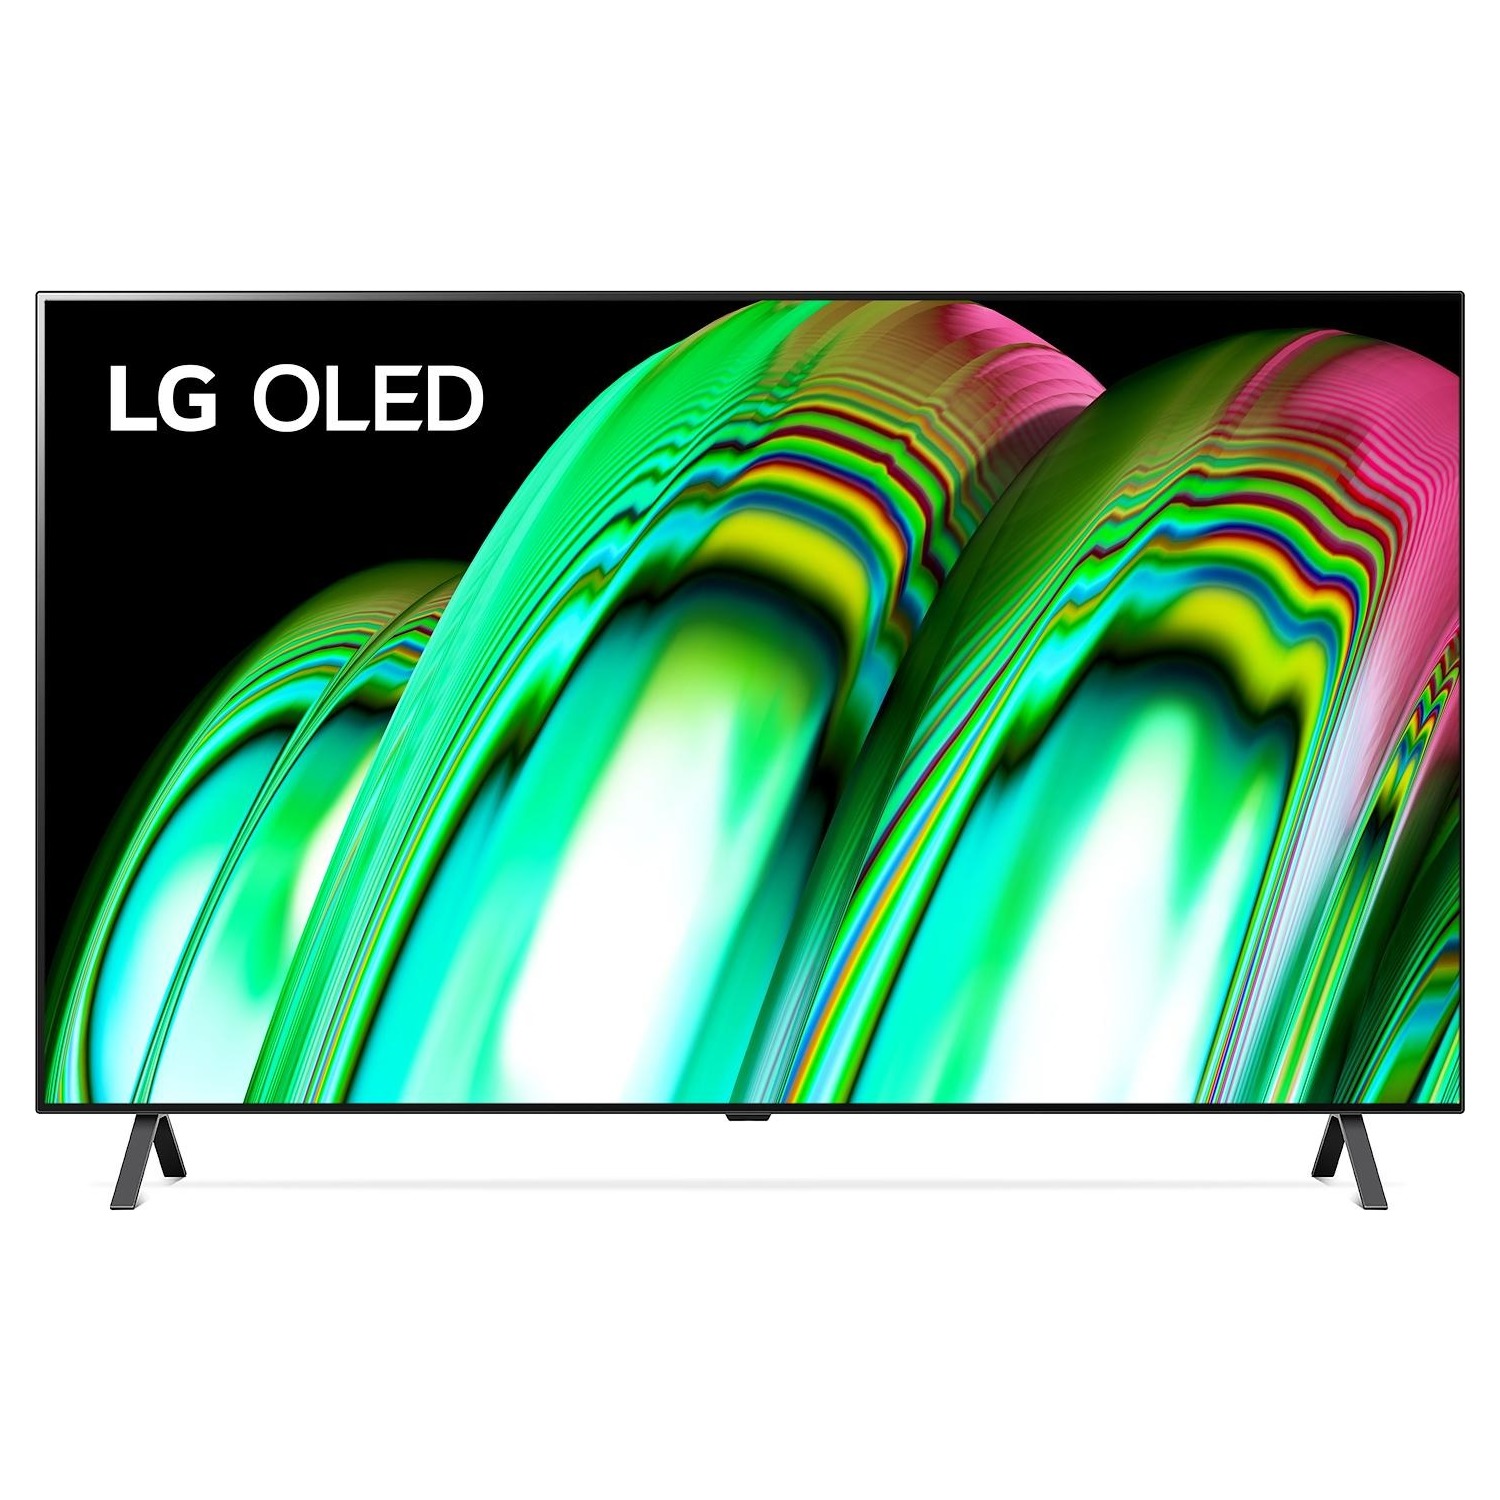 Immagine per TV OLED UHD 4K Smart LG OLED55A26 da DIMOStore